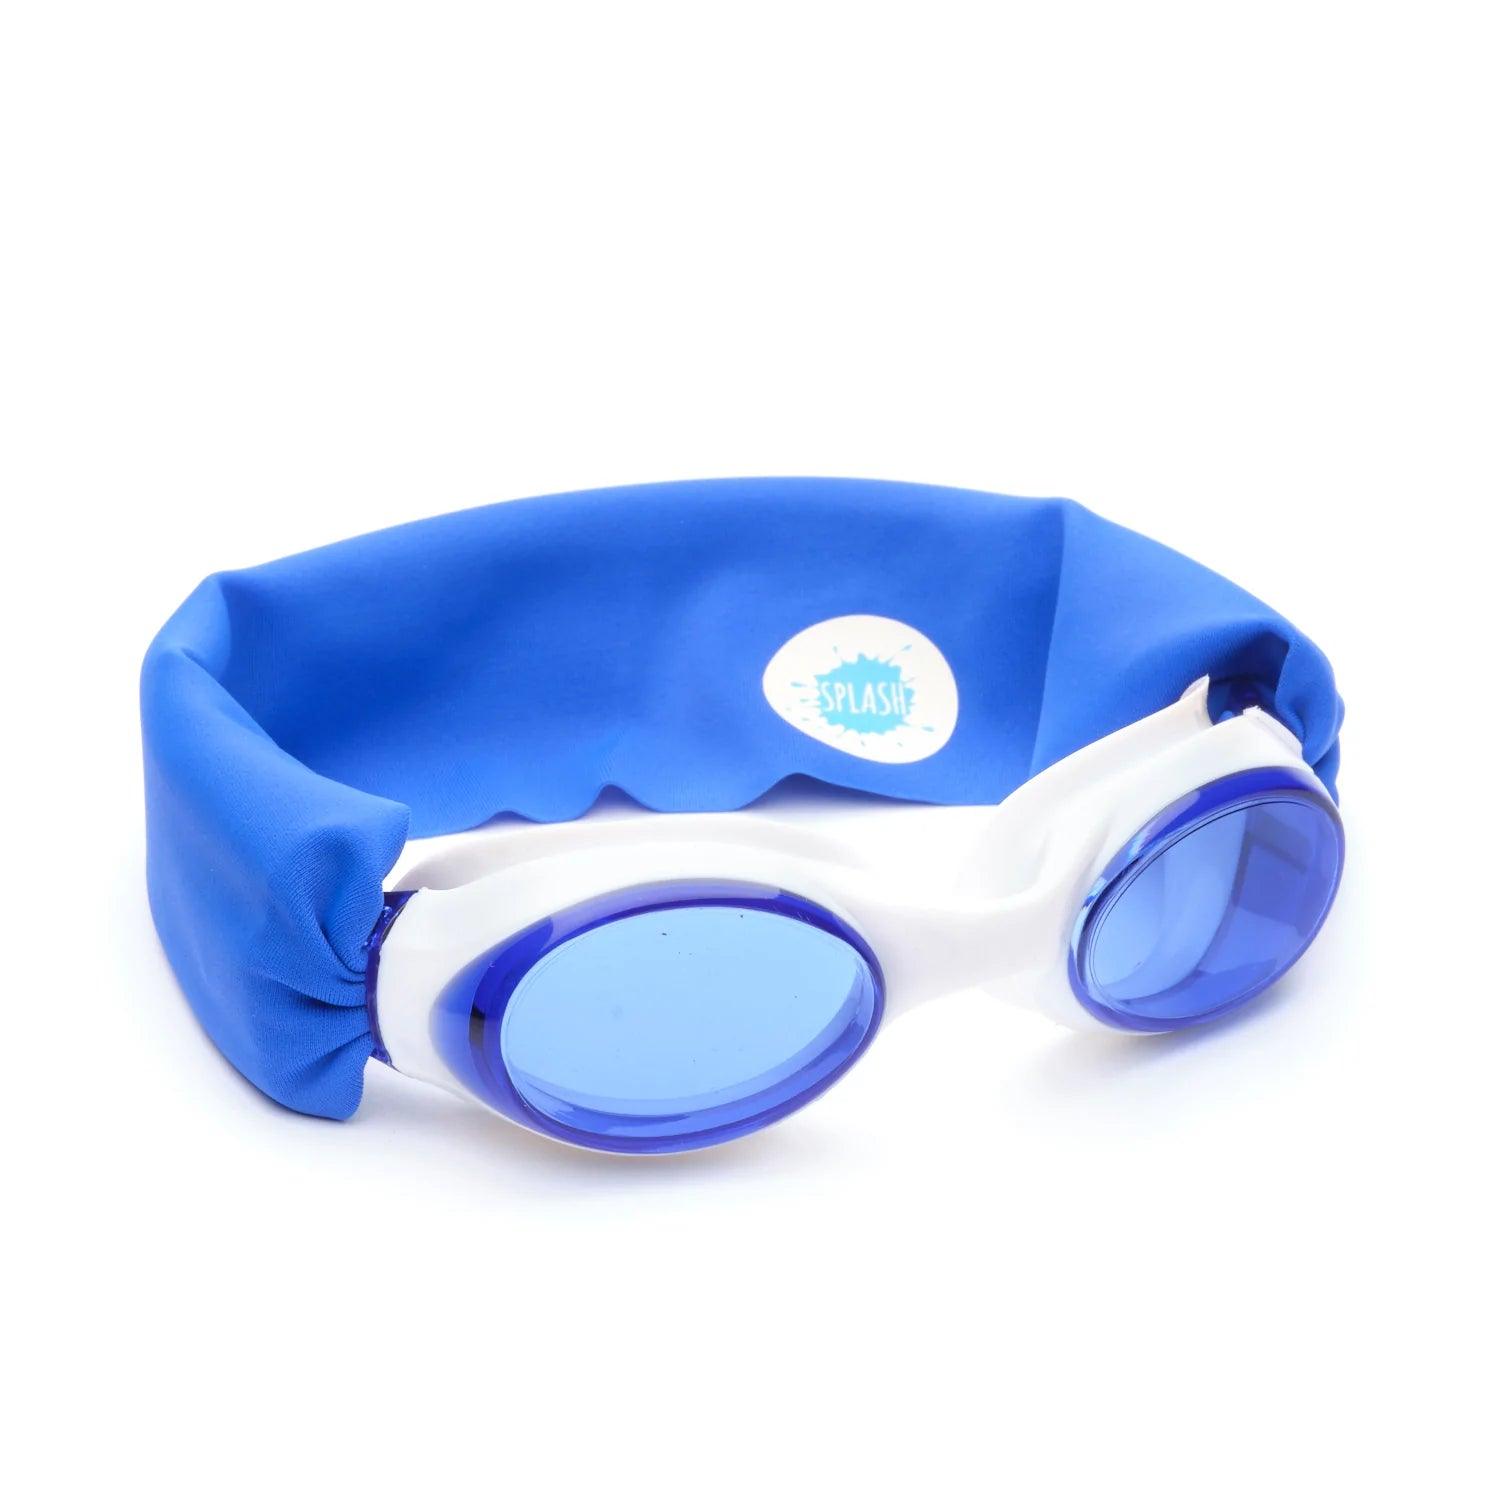 Splash Swim Goggles for Kids - 4aKid